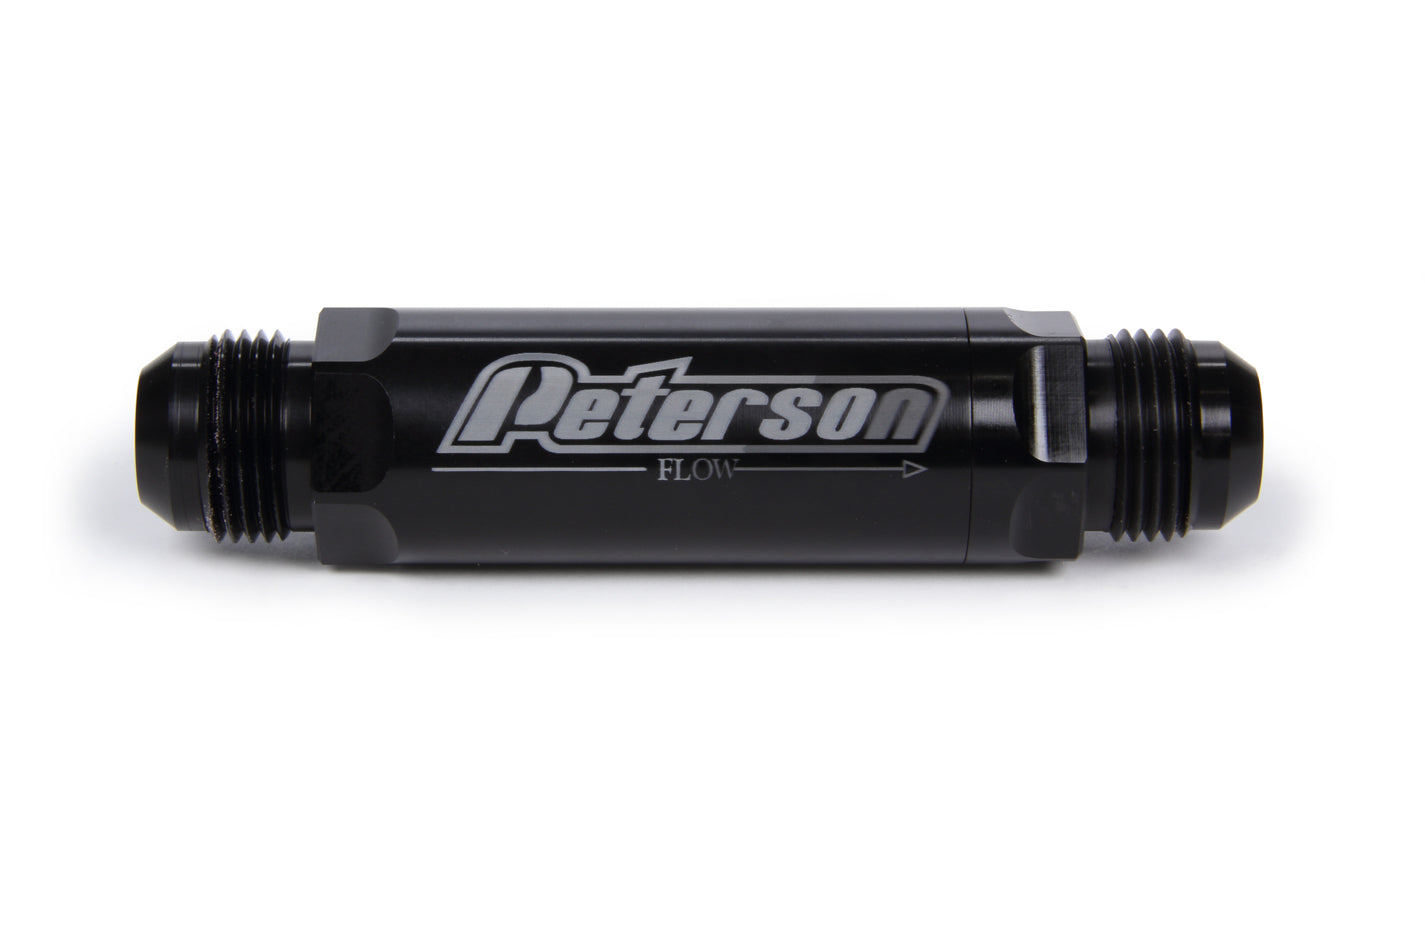 Peterson Fluid -12an Scavenge Filter PTR09-0403